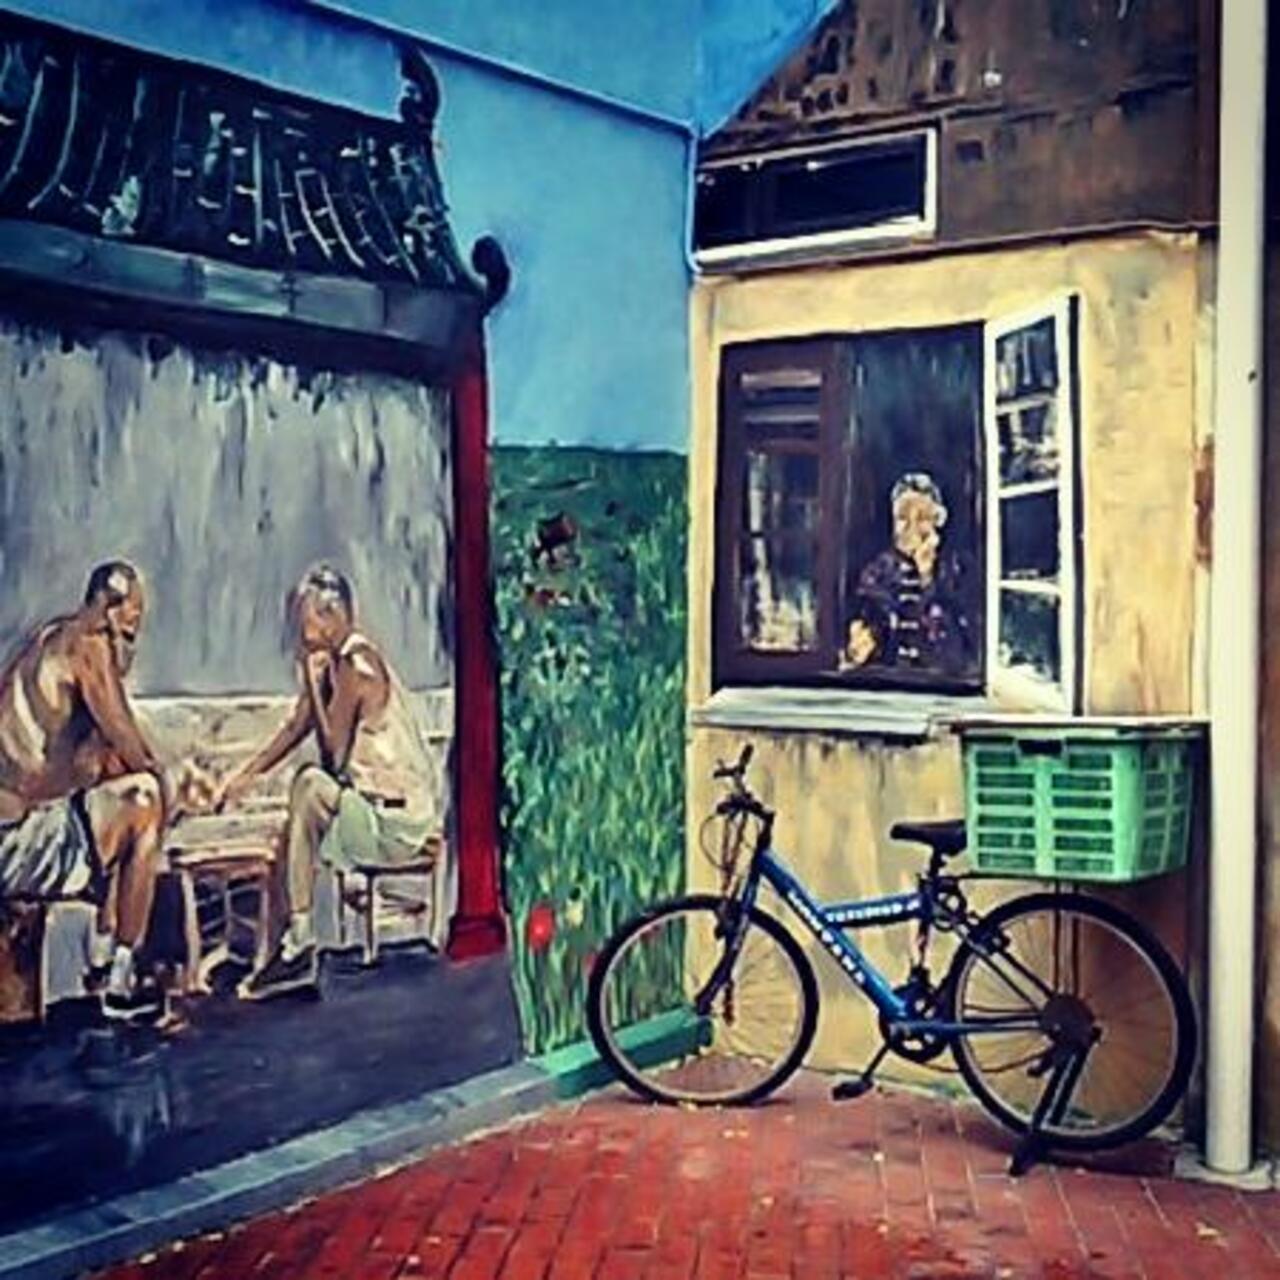 Realidad o graffiti? #streetart #mural #painting #Singapore #artecallejero #pintura #Singapur http://t.co/FyN6Esub0I